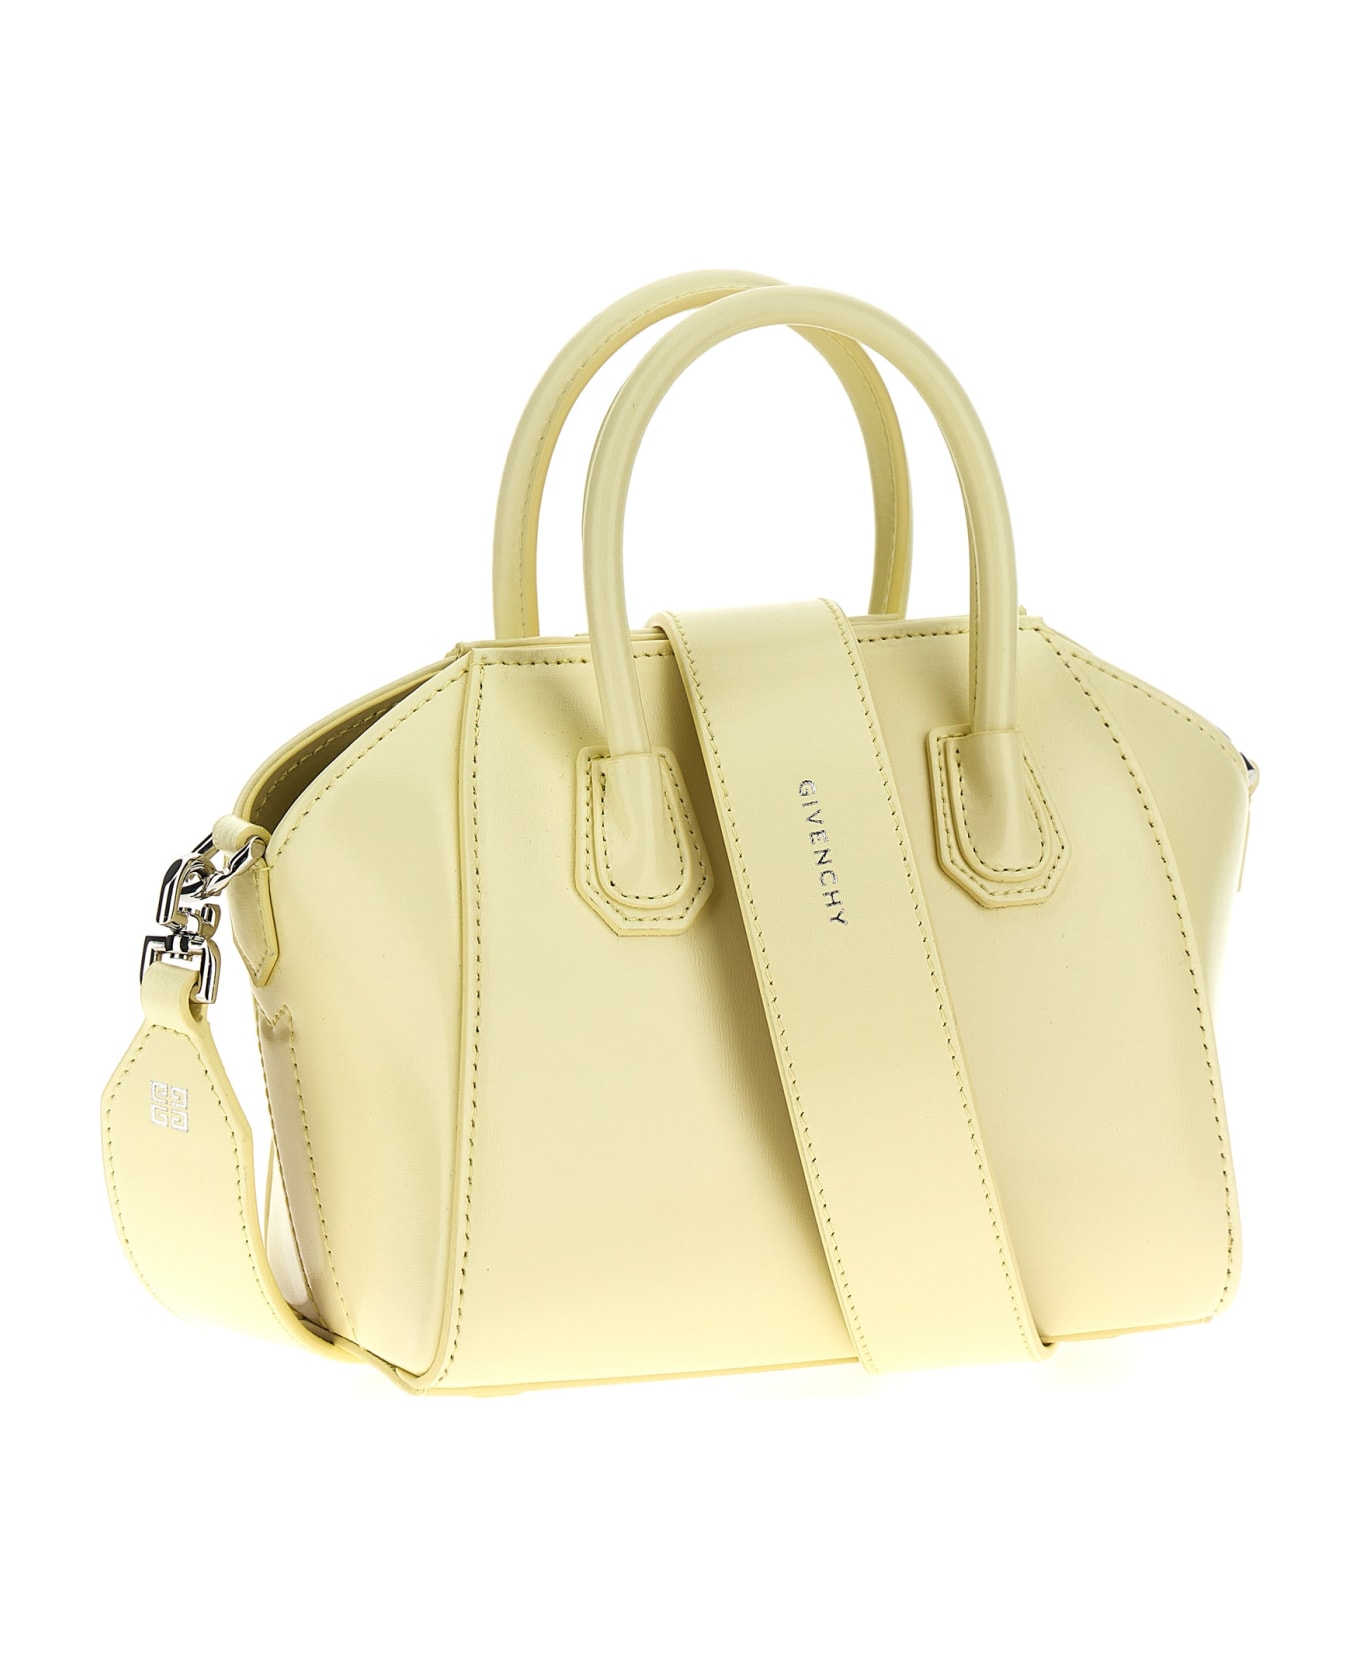 Givenchy 'antigona Toy' Handbag - White